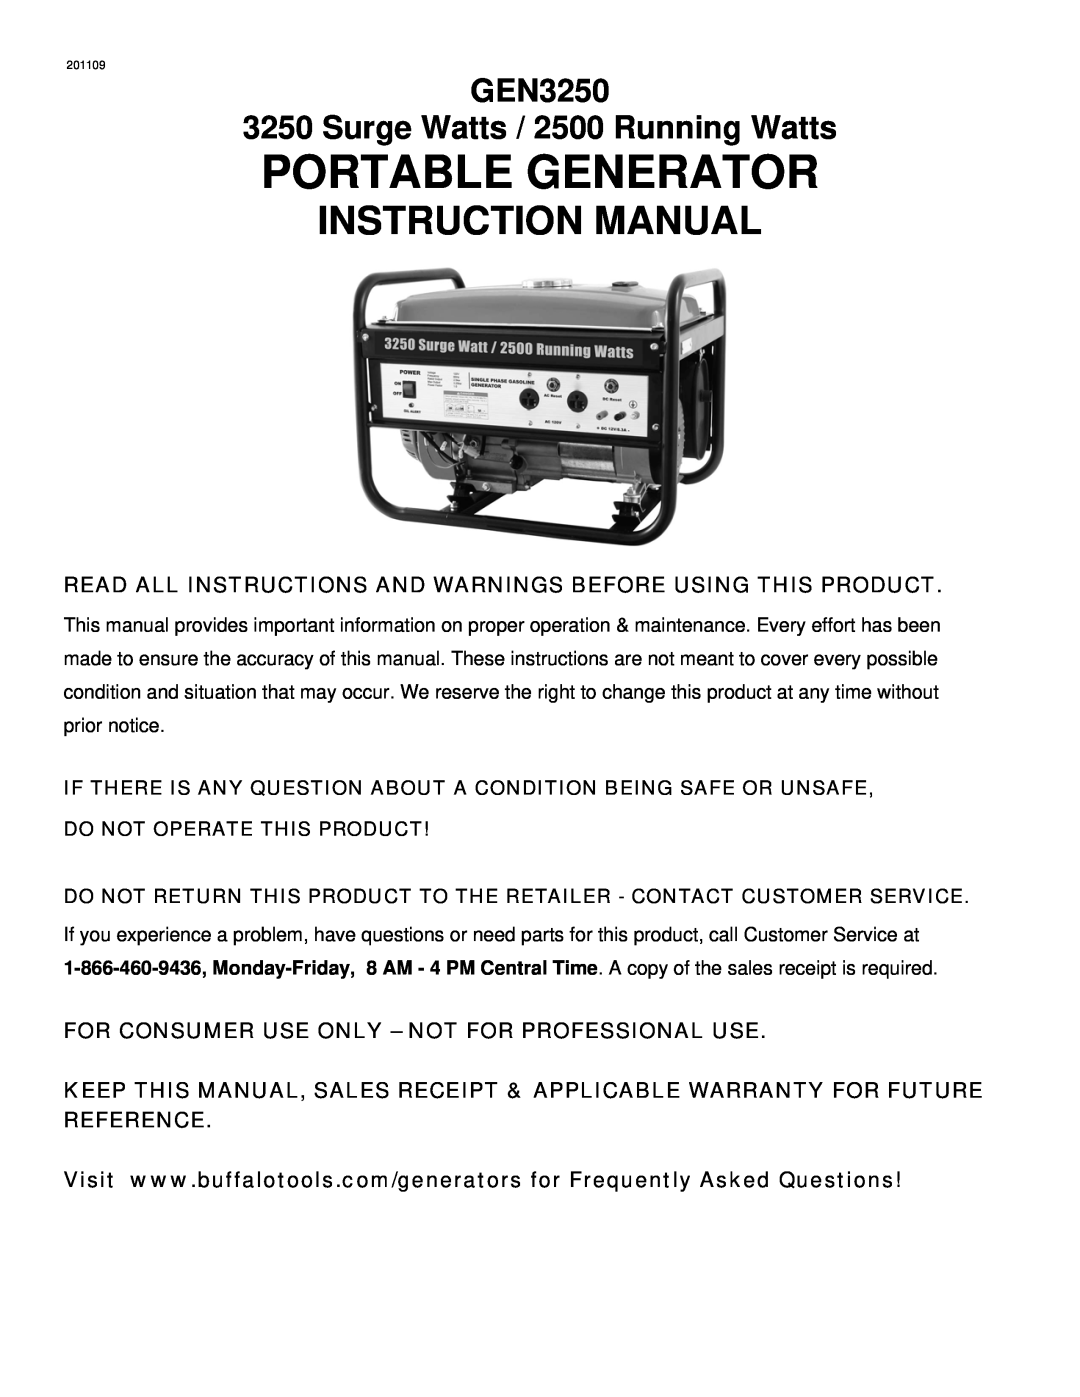 Buffalo Tools instruction manual Portable Generator, GEN3250 3250 Surge Watts / 2500 Running Watts 